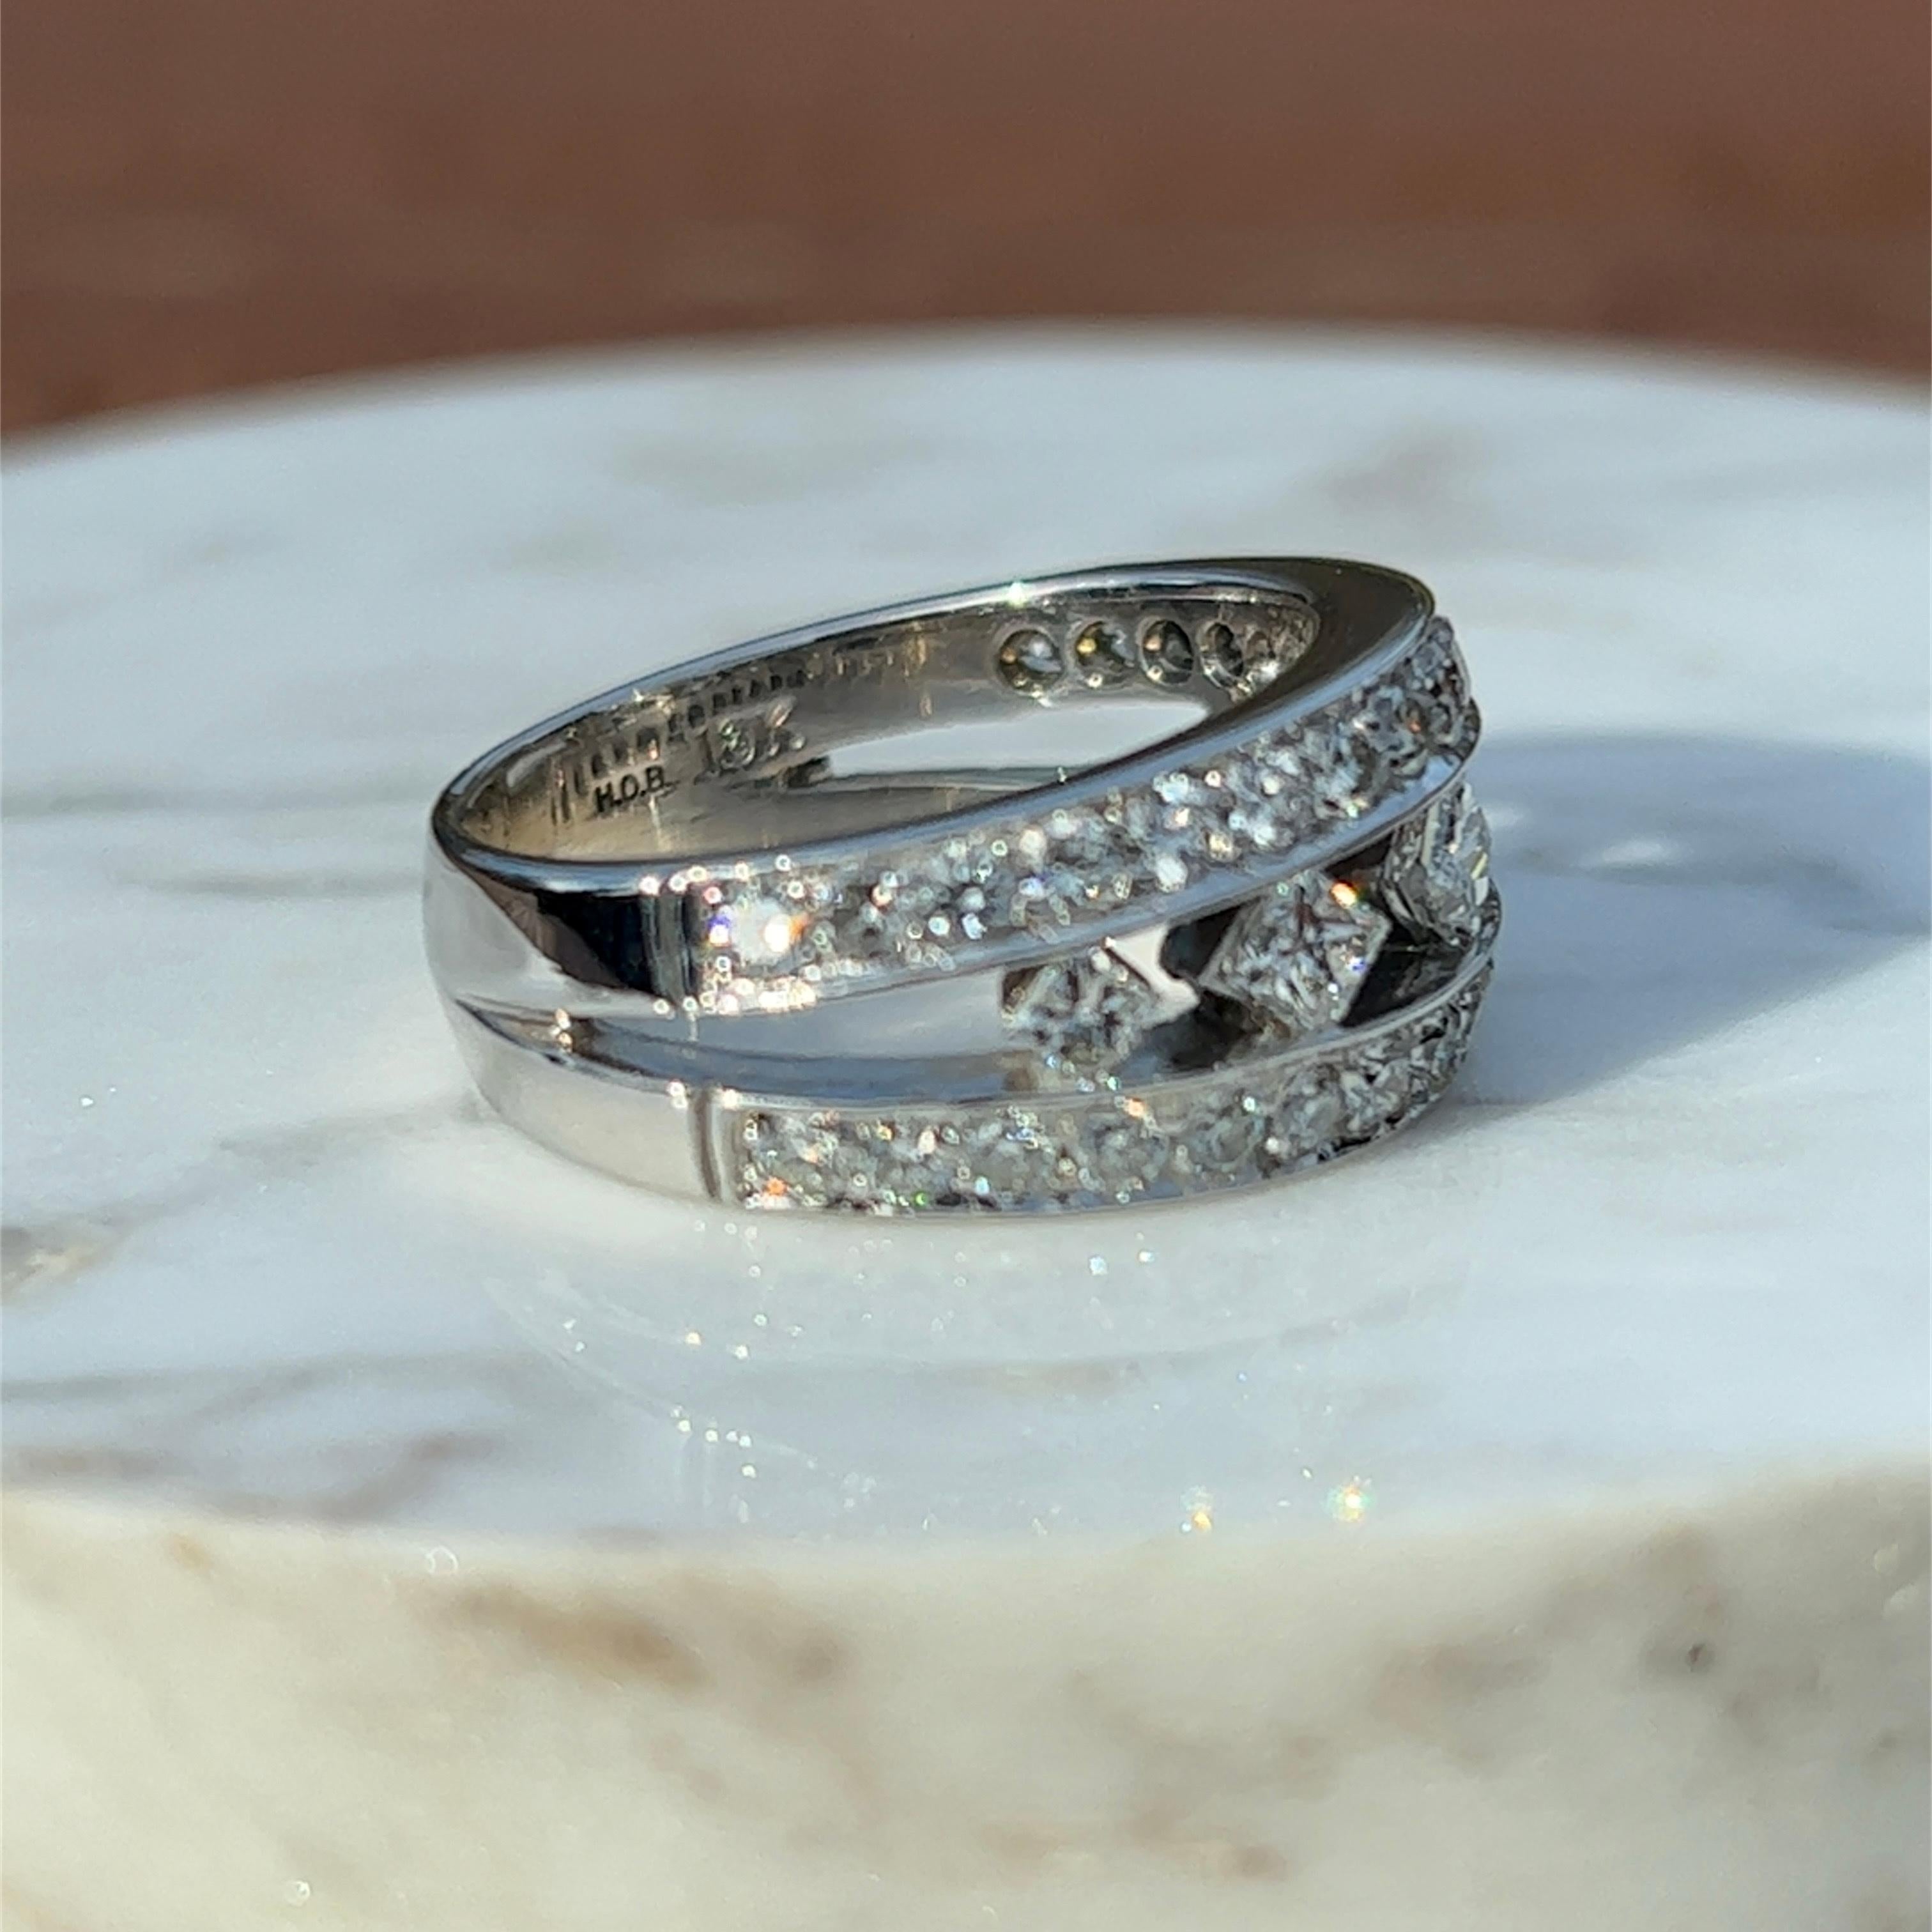 HOB 1.65 Carat Total Diamond Fashion Ring in 18K Gold 3